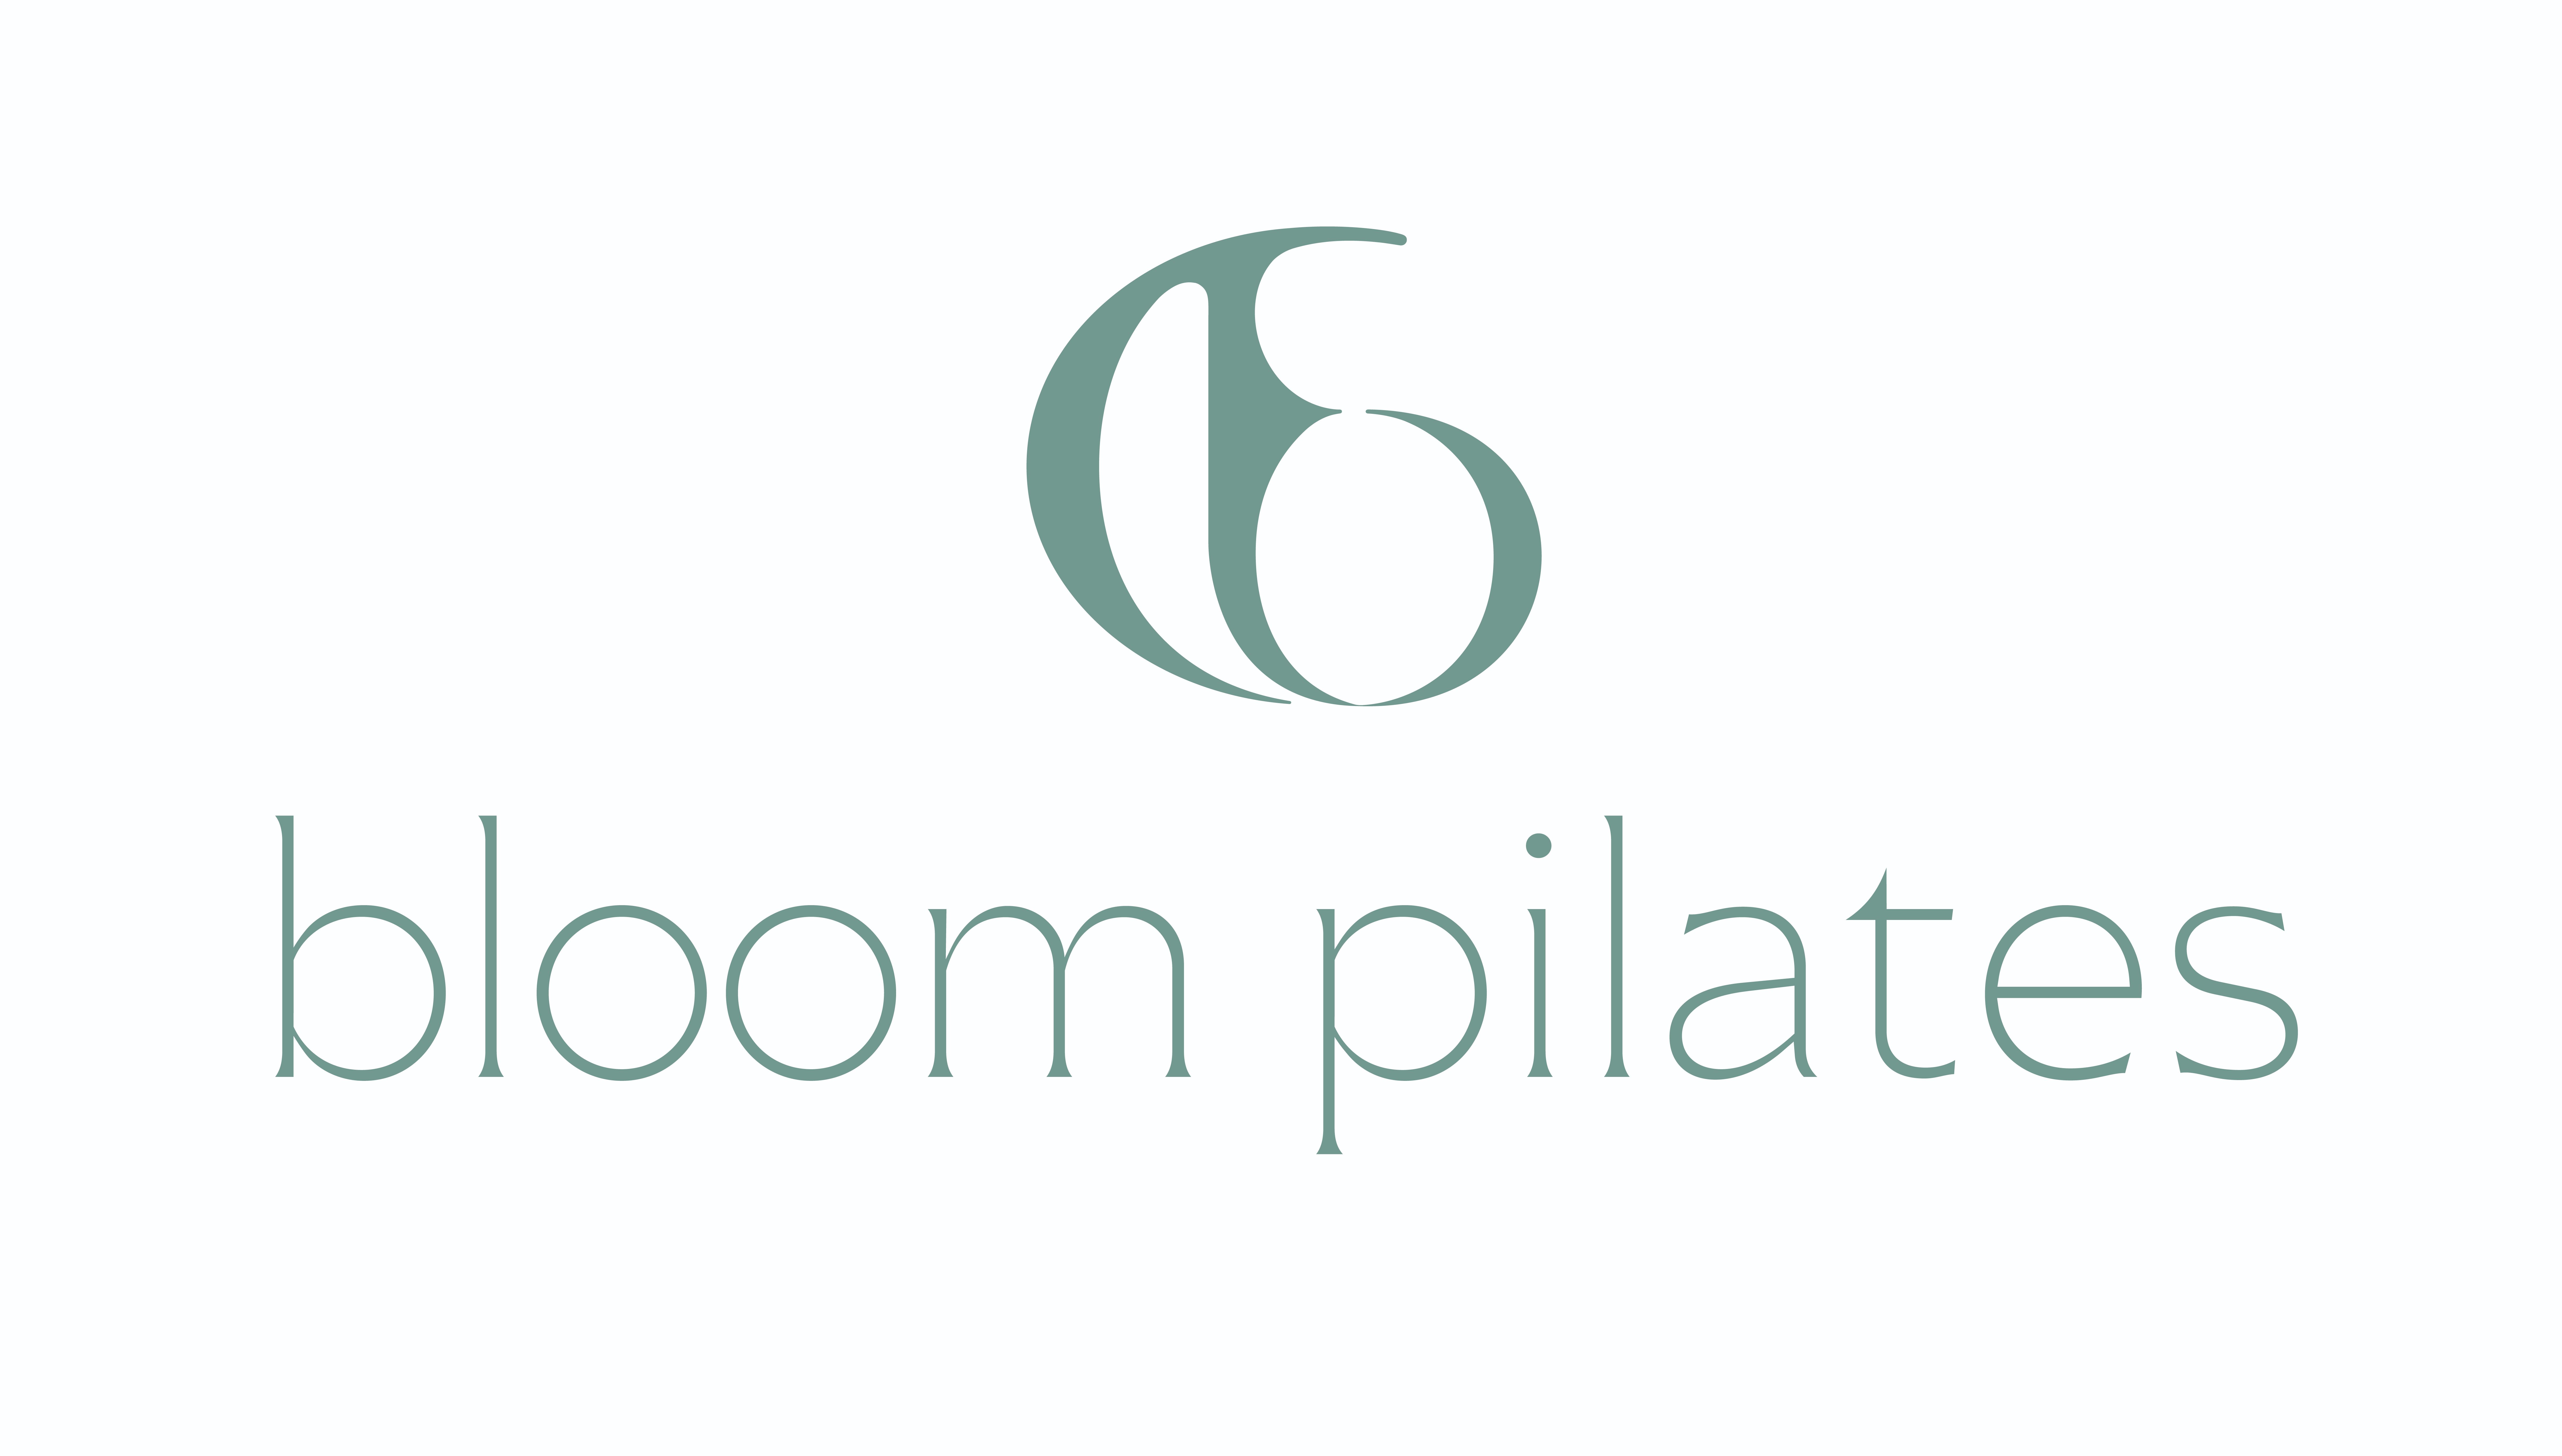 bloom pilates